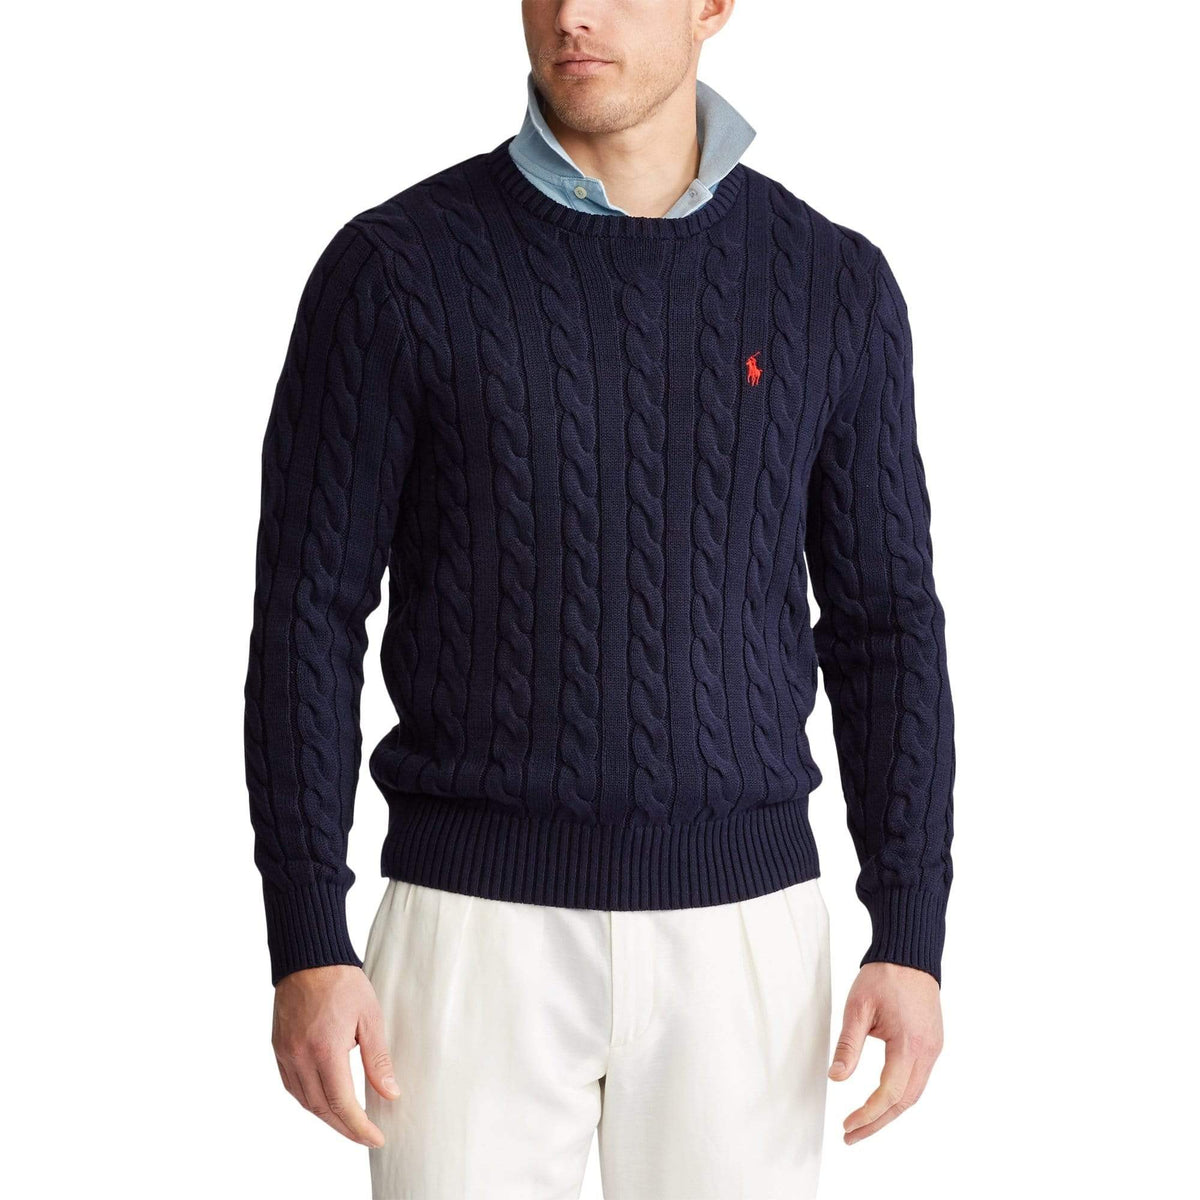 Polo Ralph Lauren - Jumpers - Polo Ralph Lauren Cable-Knit Cotton Sweater